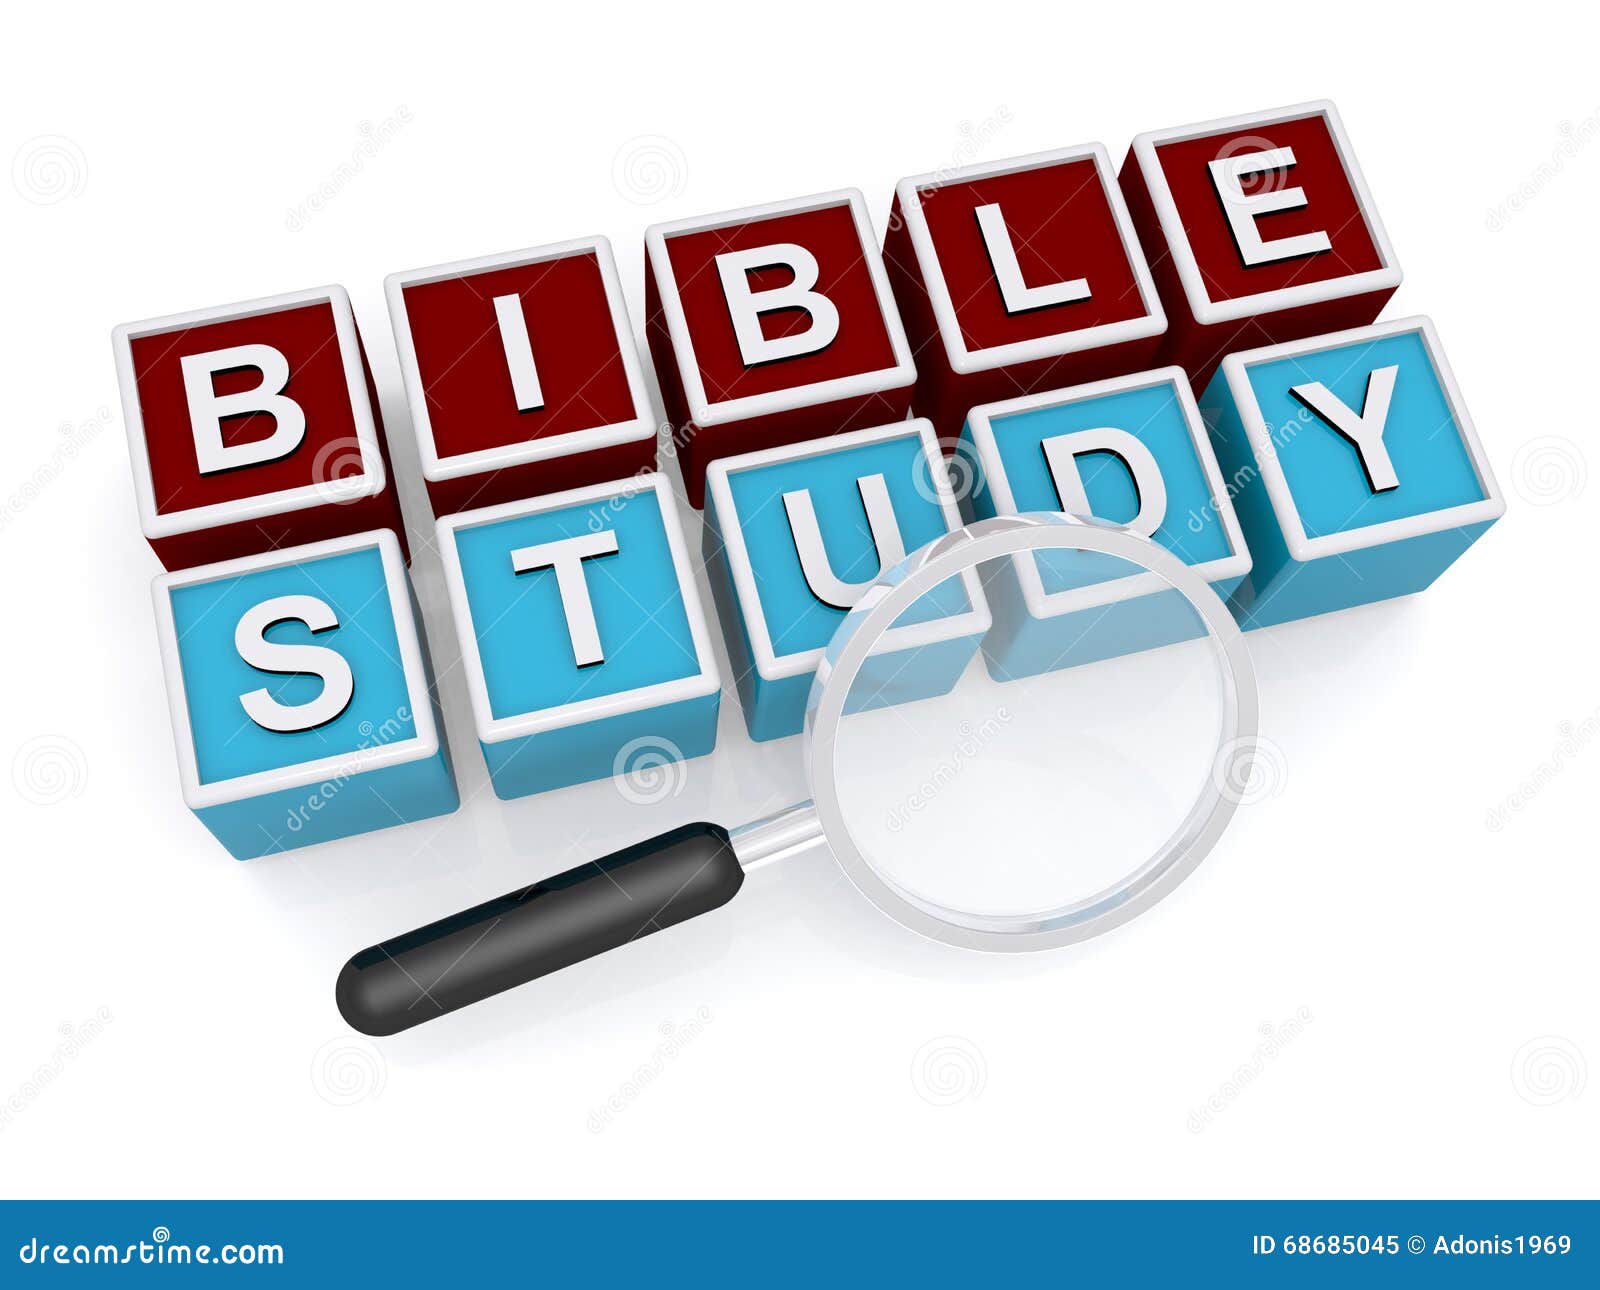 bible study